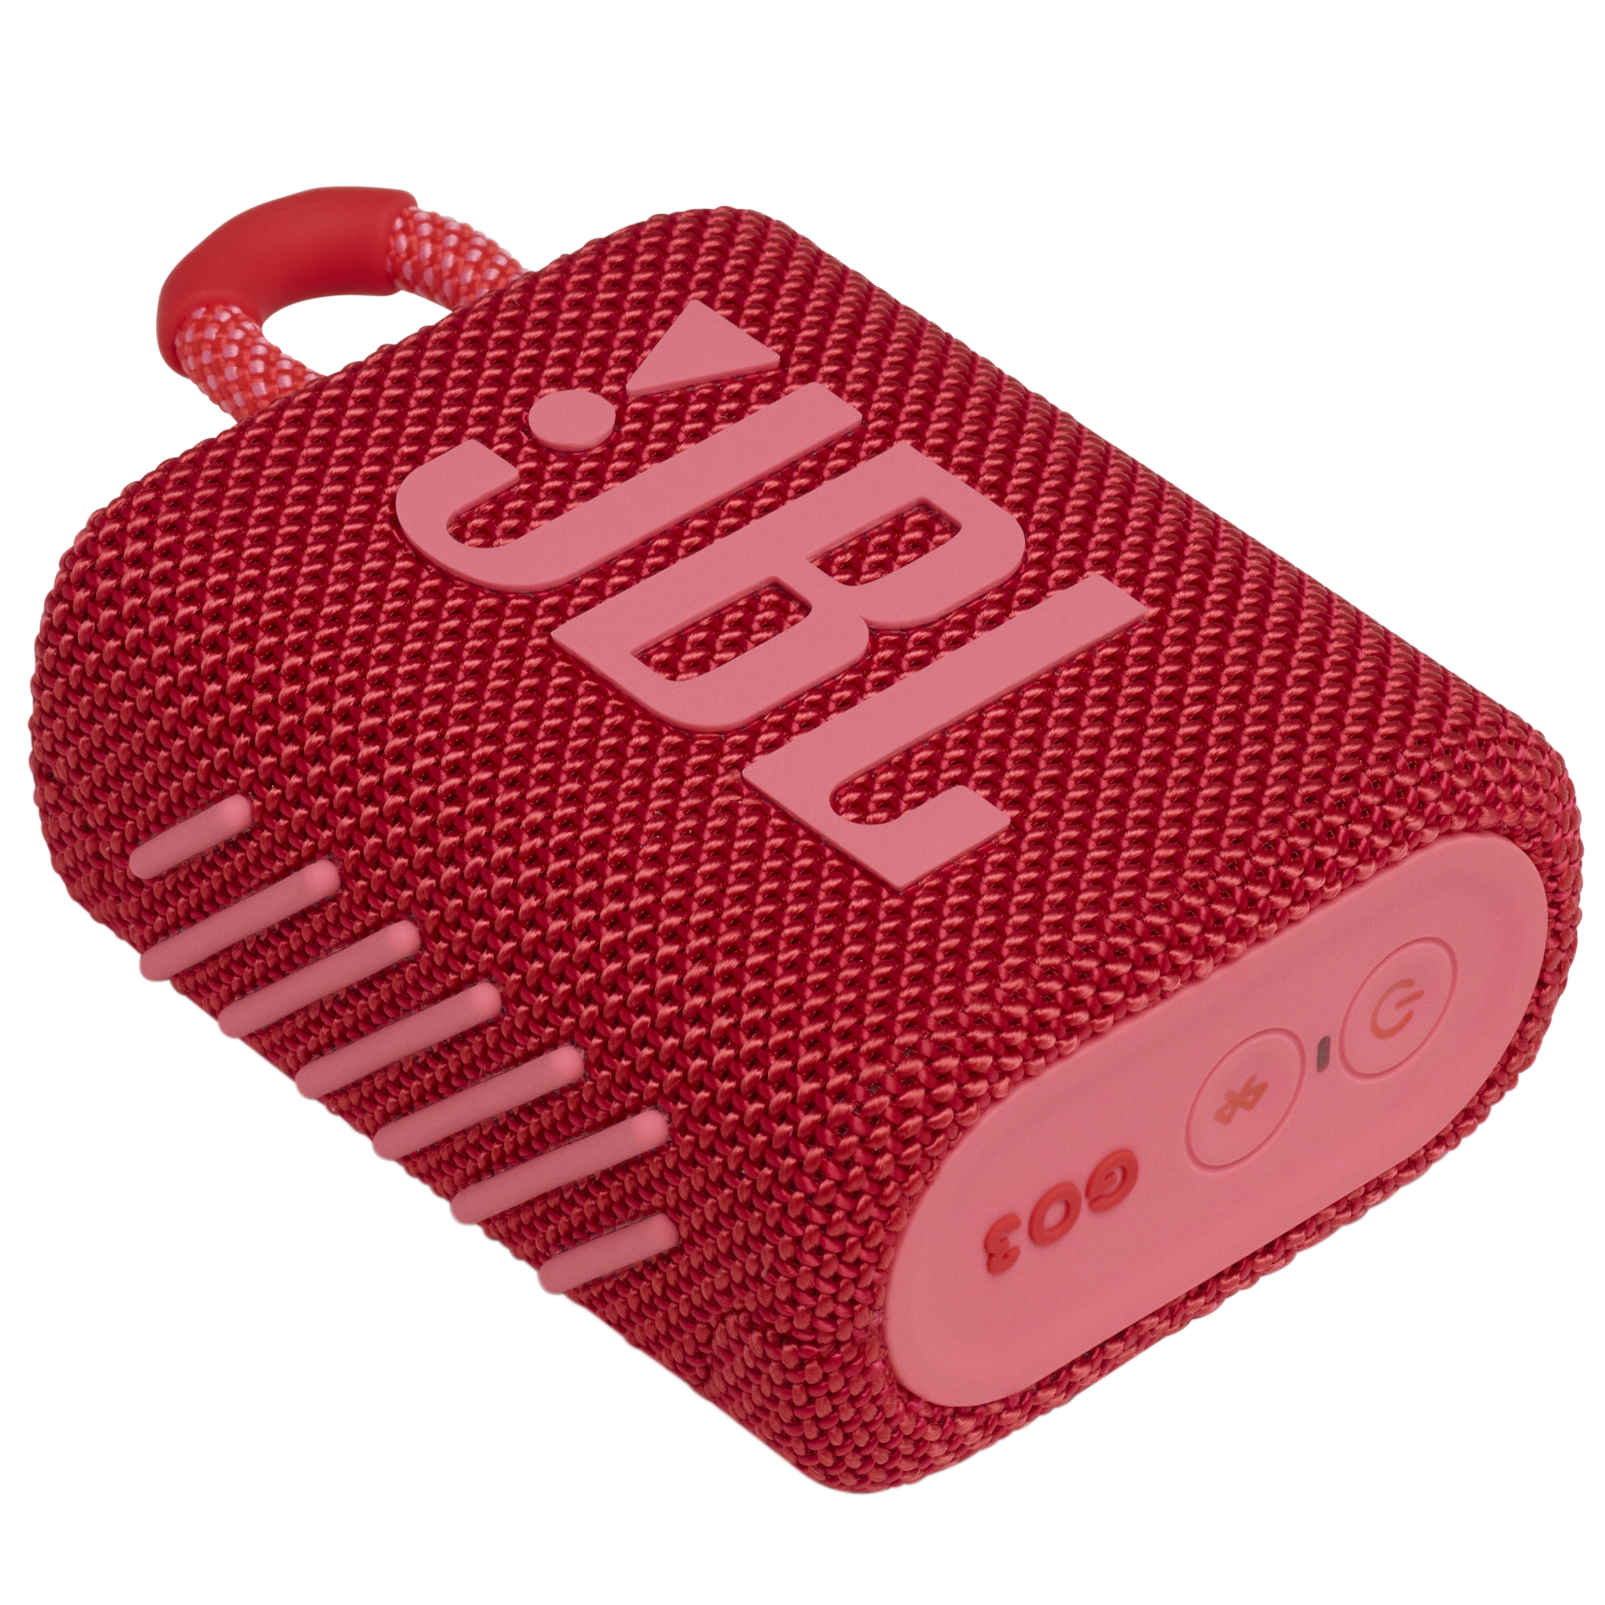 JBL Go 3 - Red - Portable Waterproof Speaker - Detailshot 3